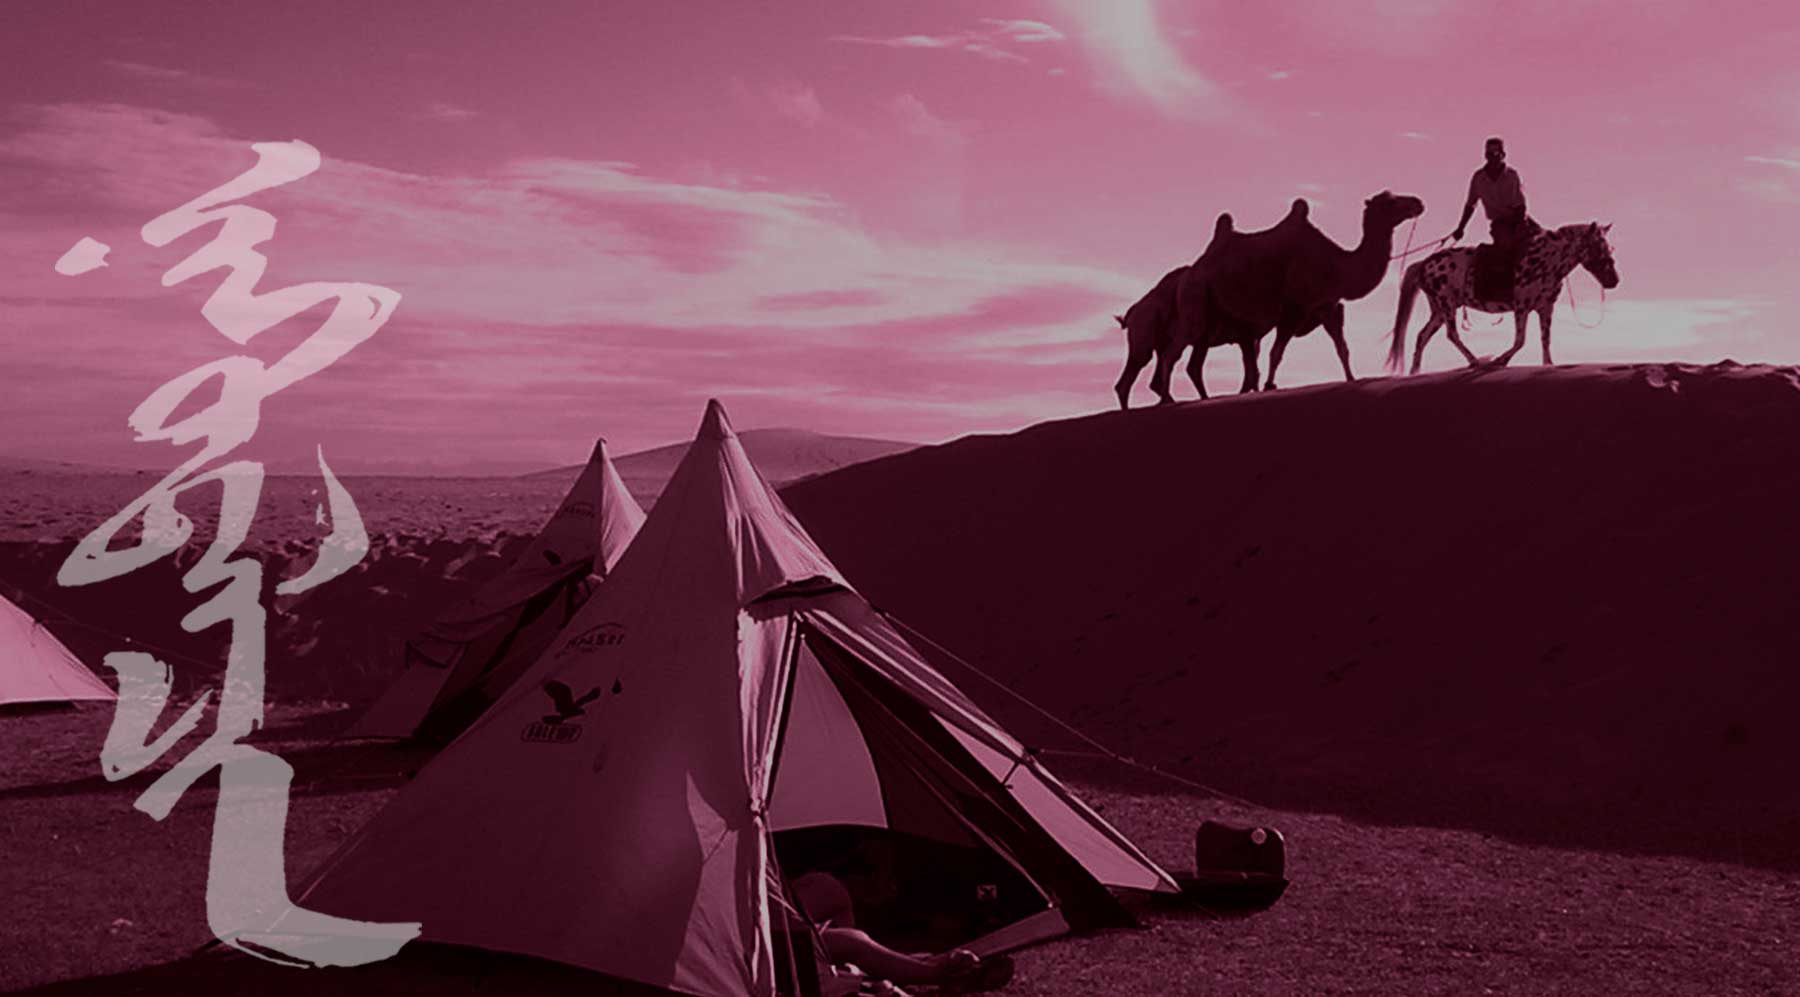 MONGOLIA TRAVEL PHOTOS - Gobi Desert Camel Riding - Mongolia Nomads Tours